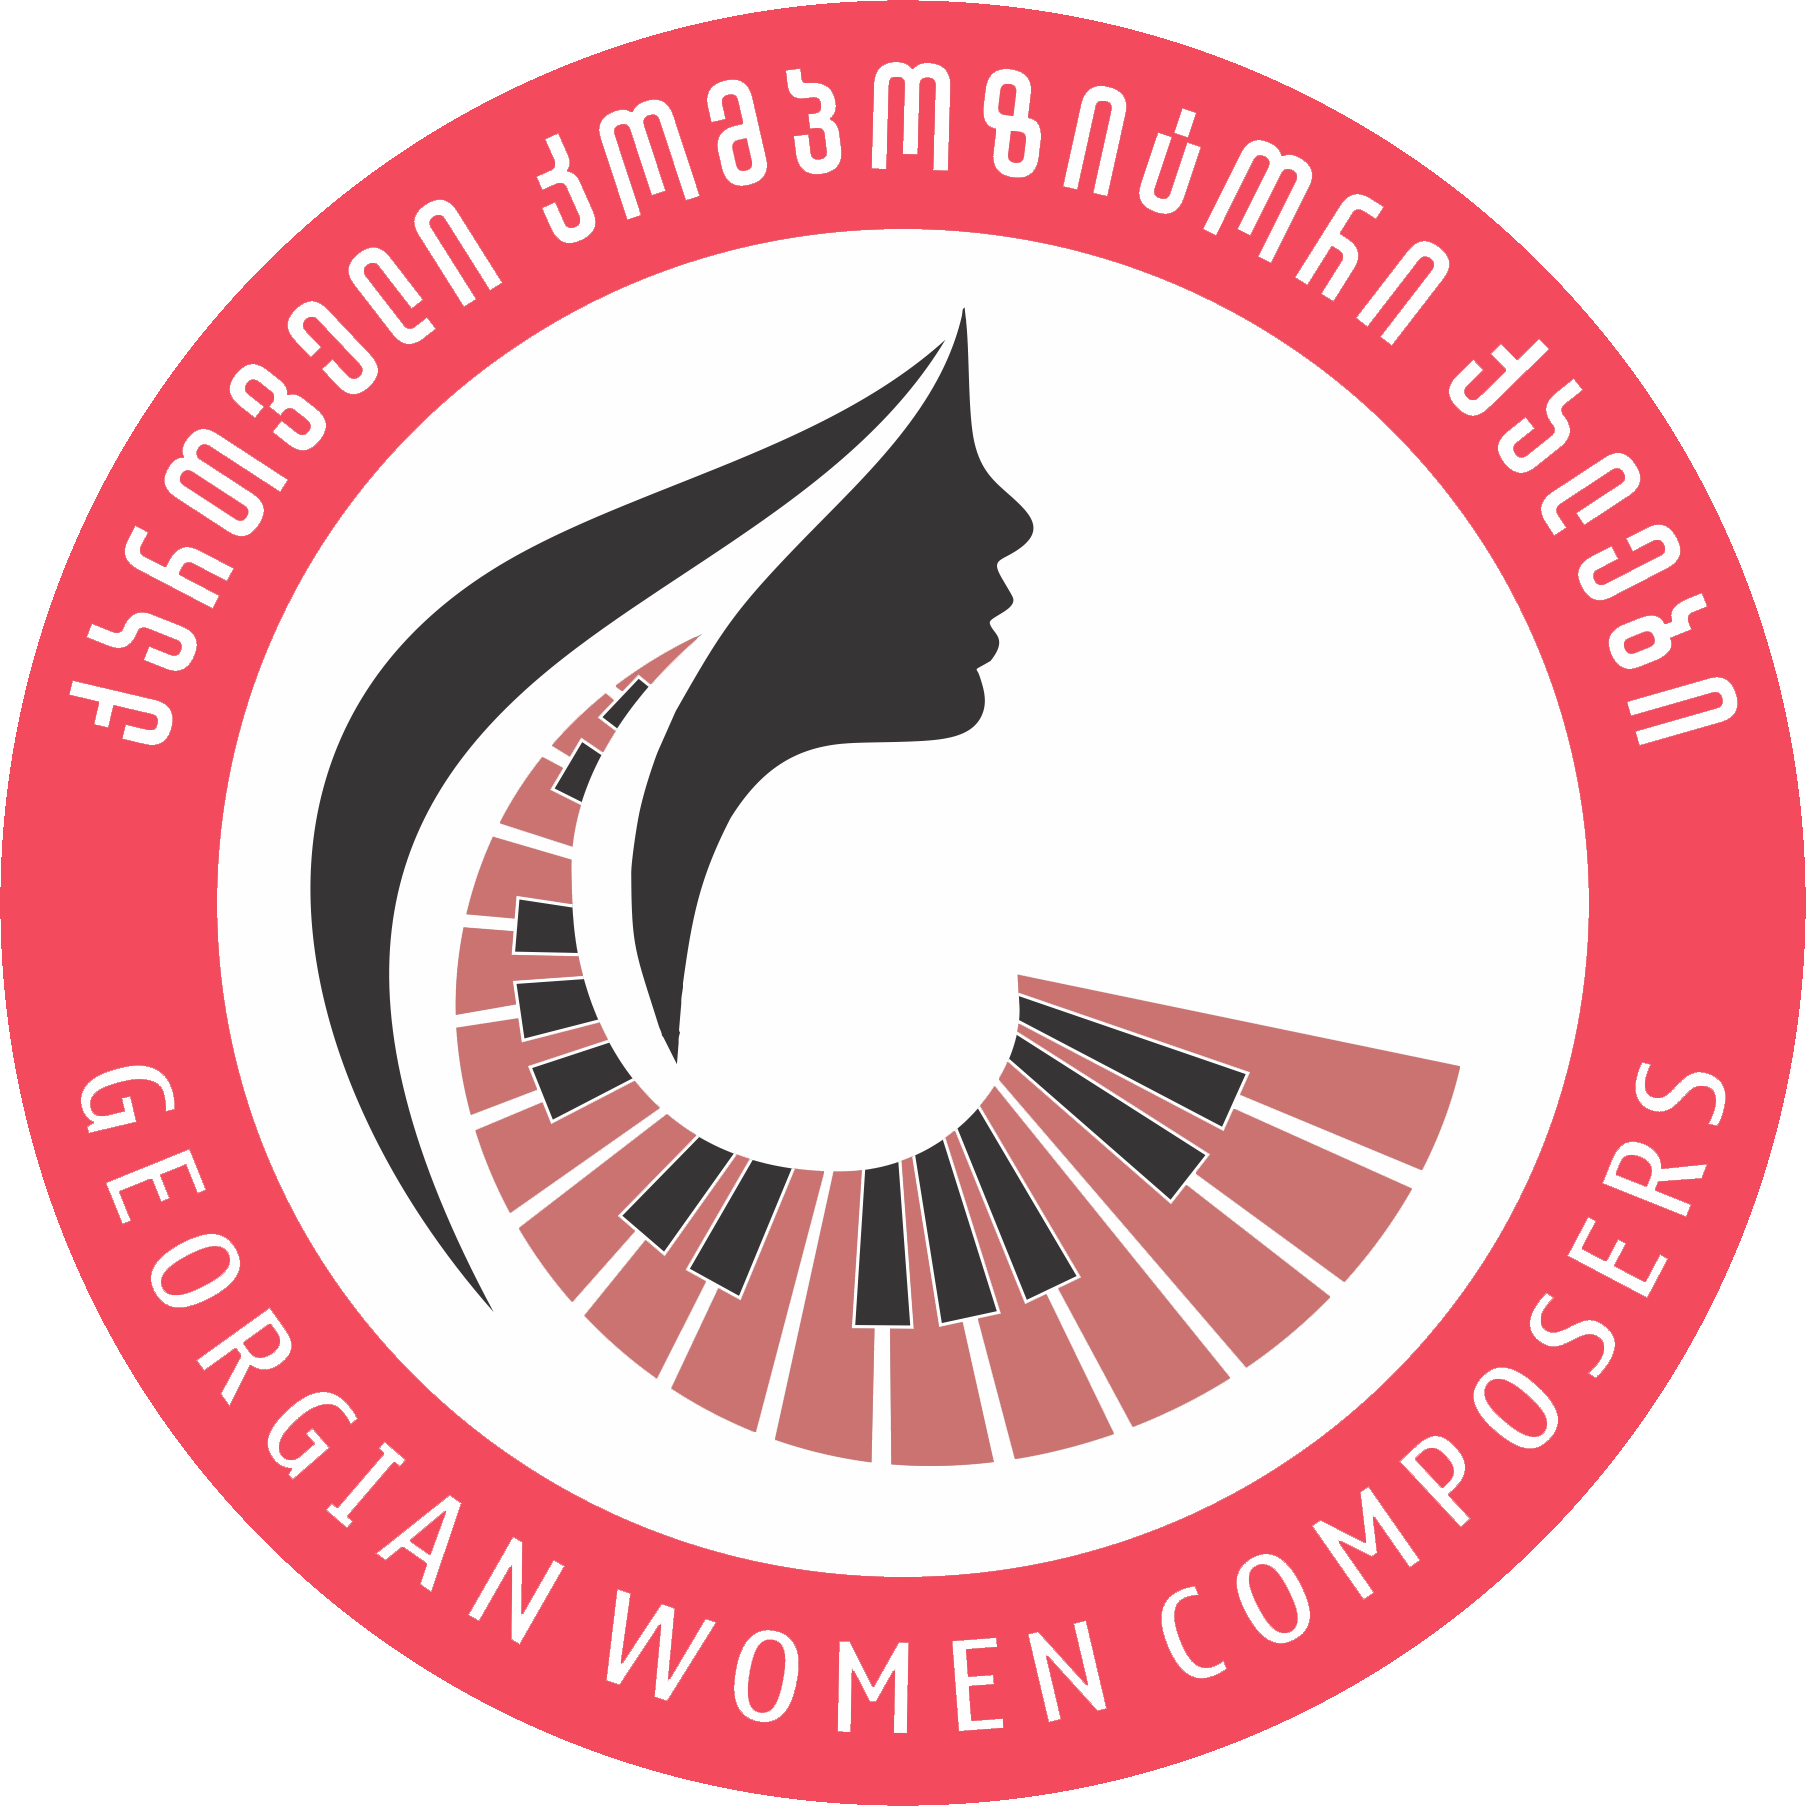  Web Portal - Georgian Women Composers  